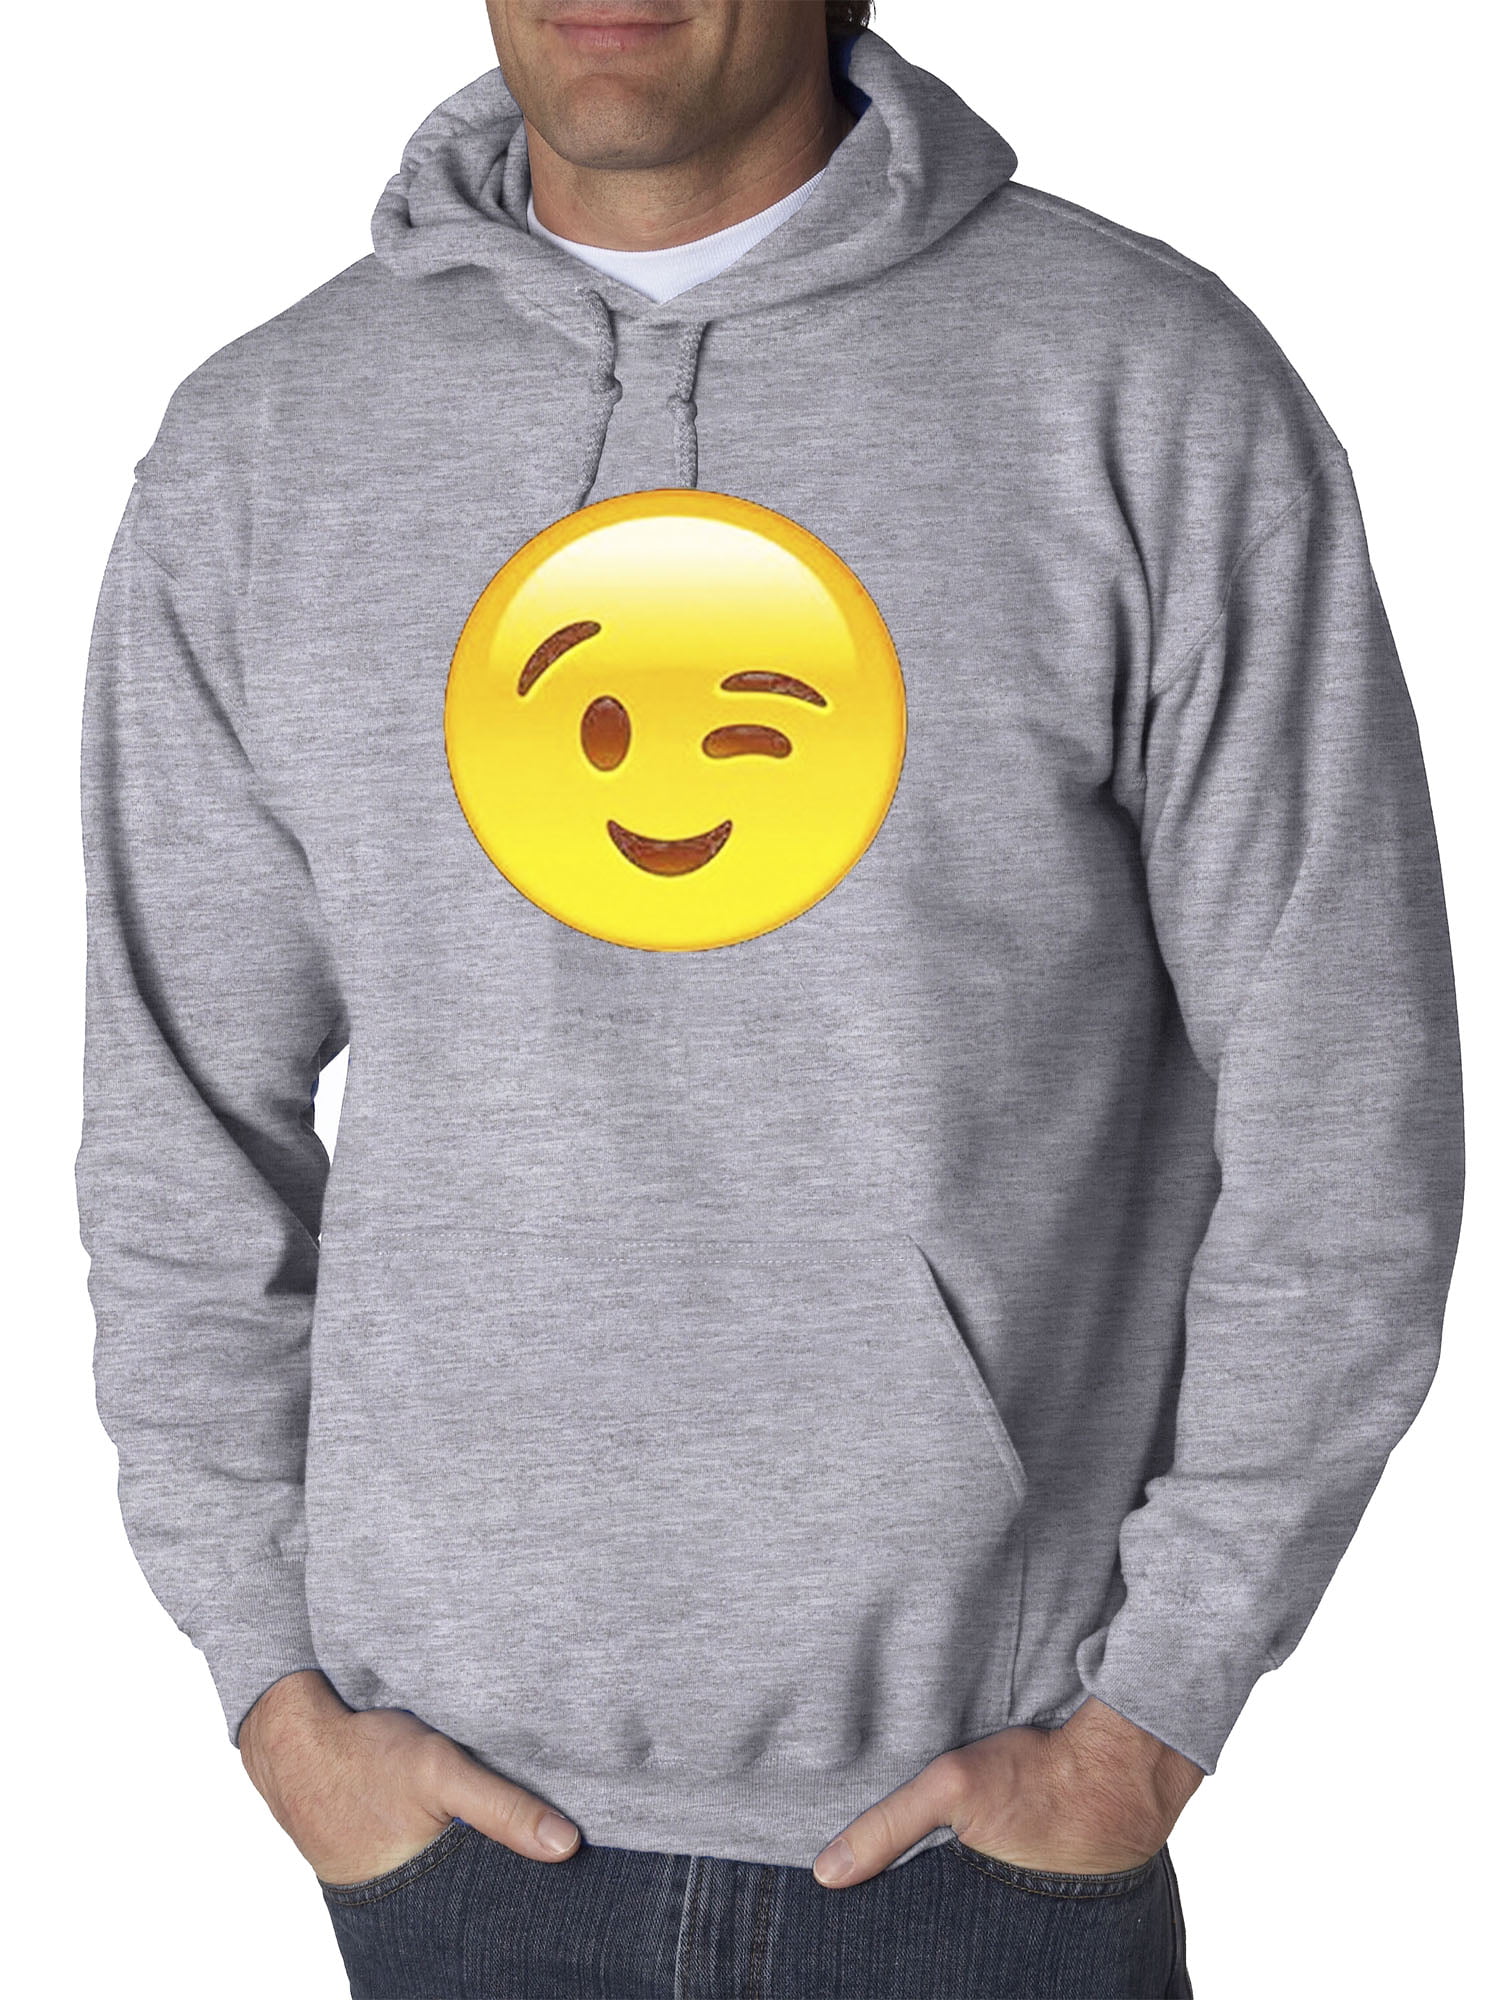 Hoodies Sweatshirt Men 3D Print Sun,Warm Colored Circular Motifs,Sweatshirts for Teens 